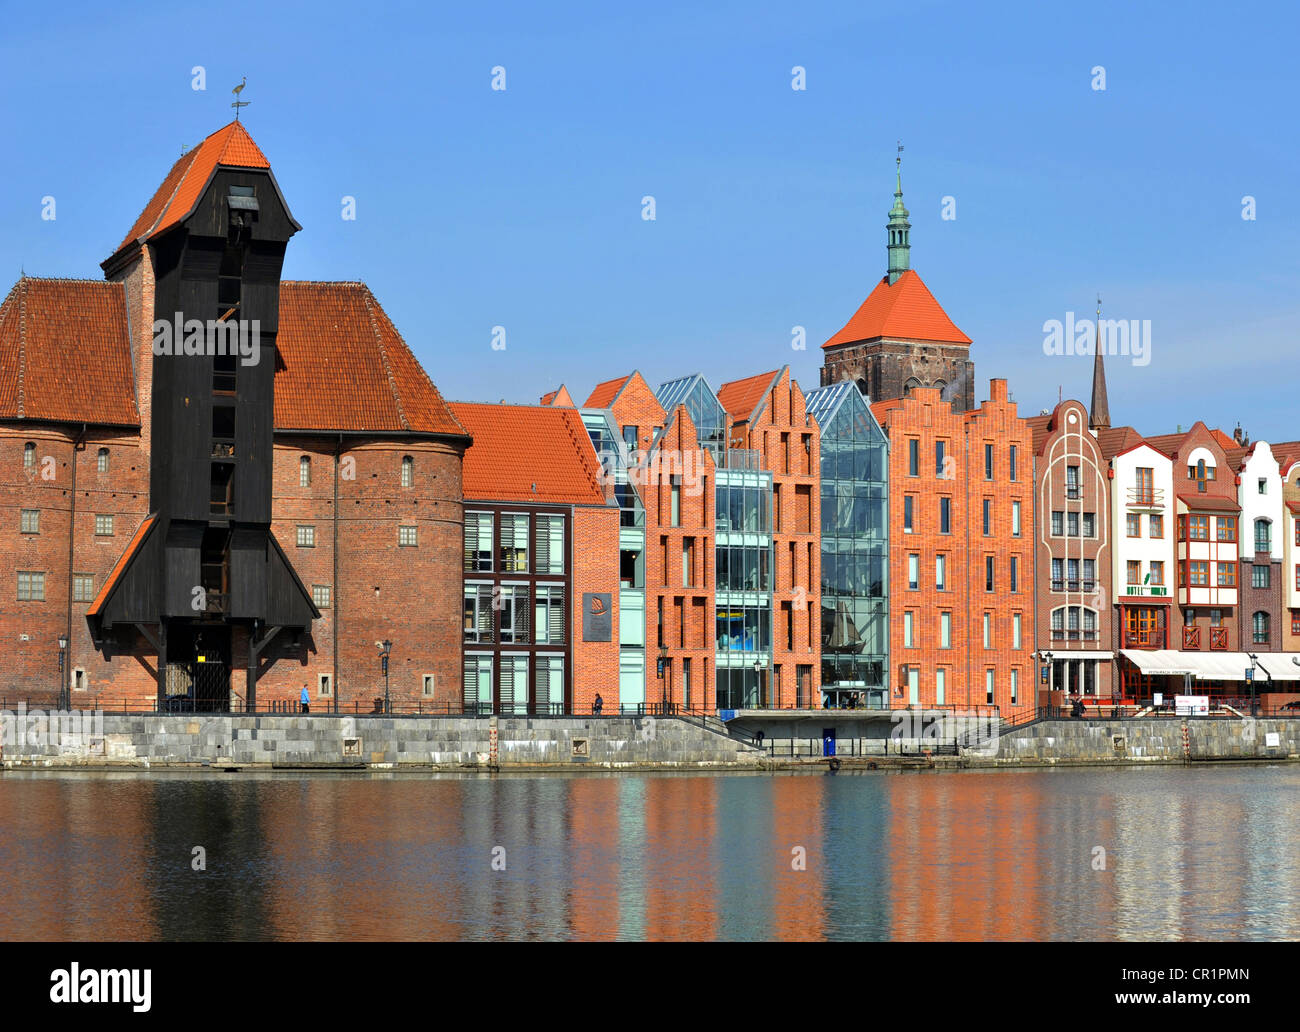 Ancienne Grue et port, Gdansk, Pologne Banque D'Images